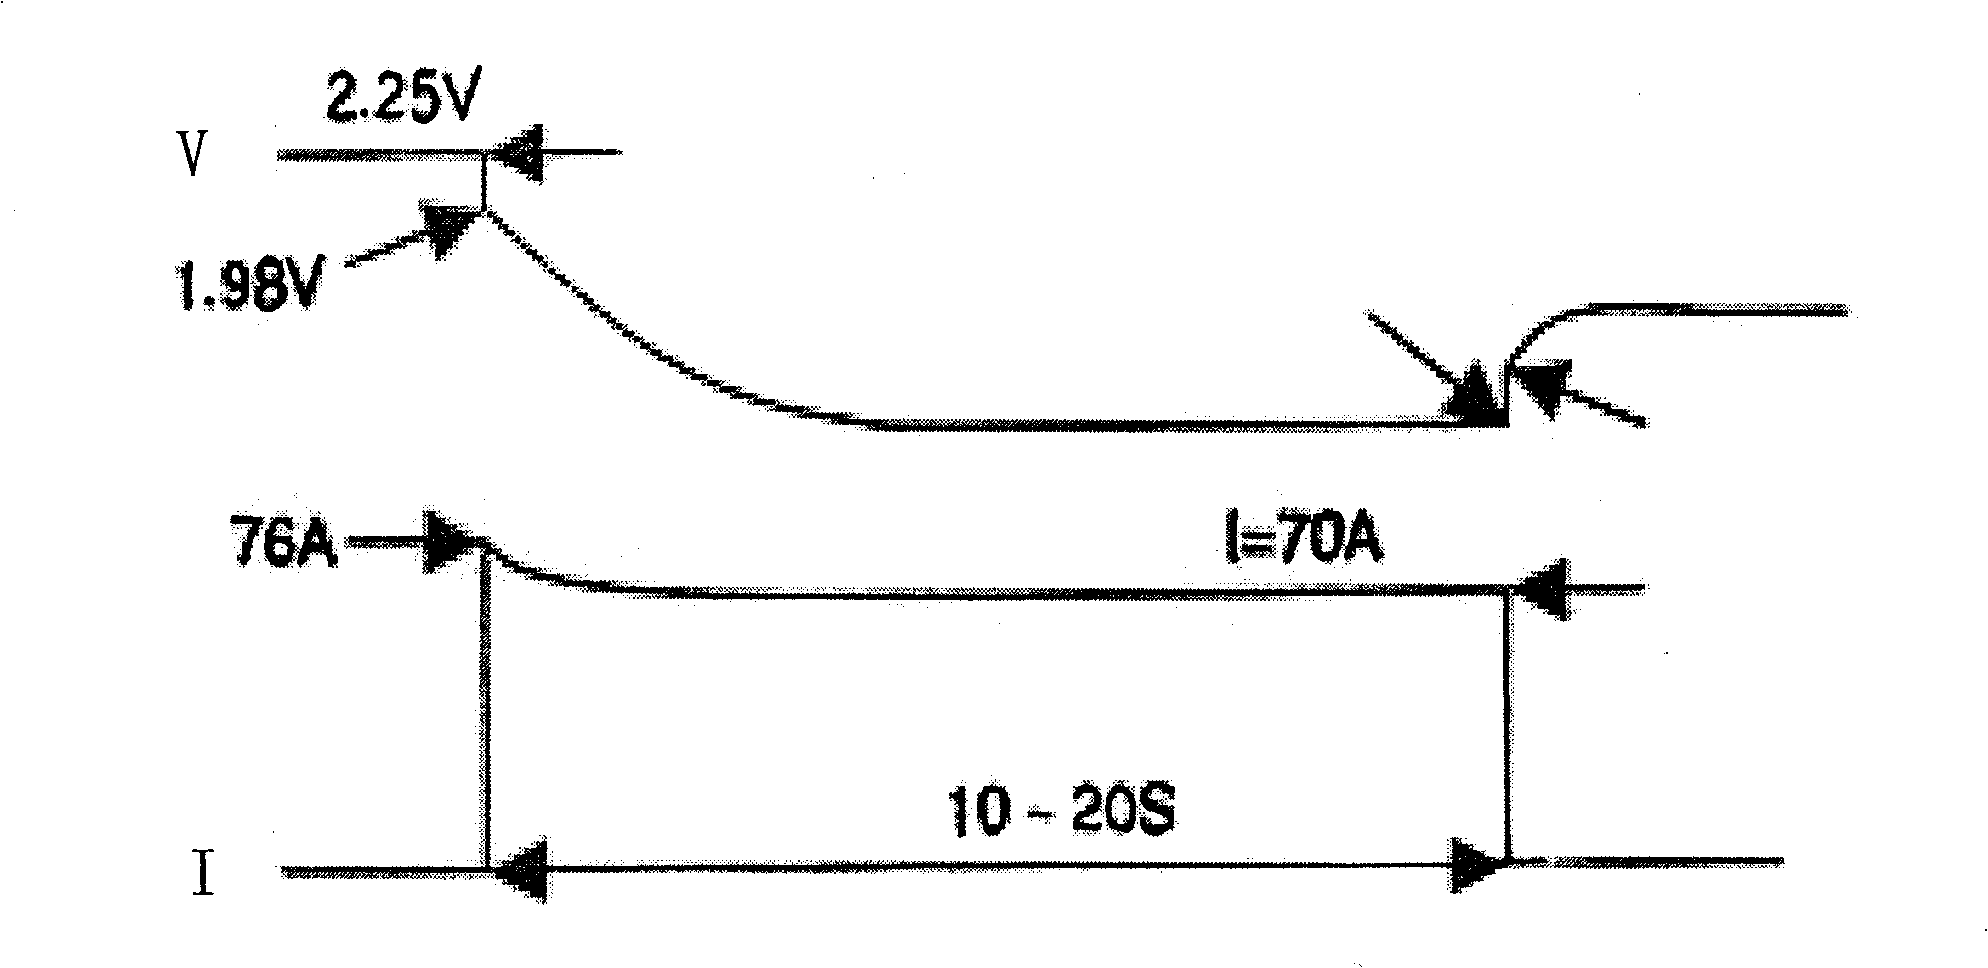 Accumulator internal resistance measurement method